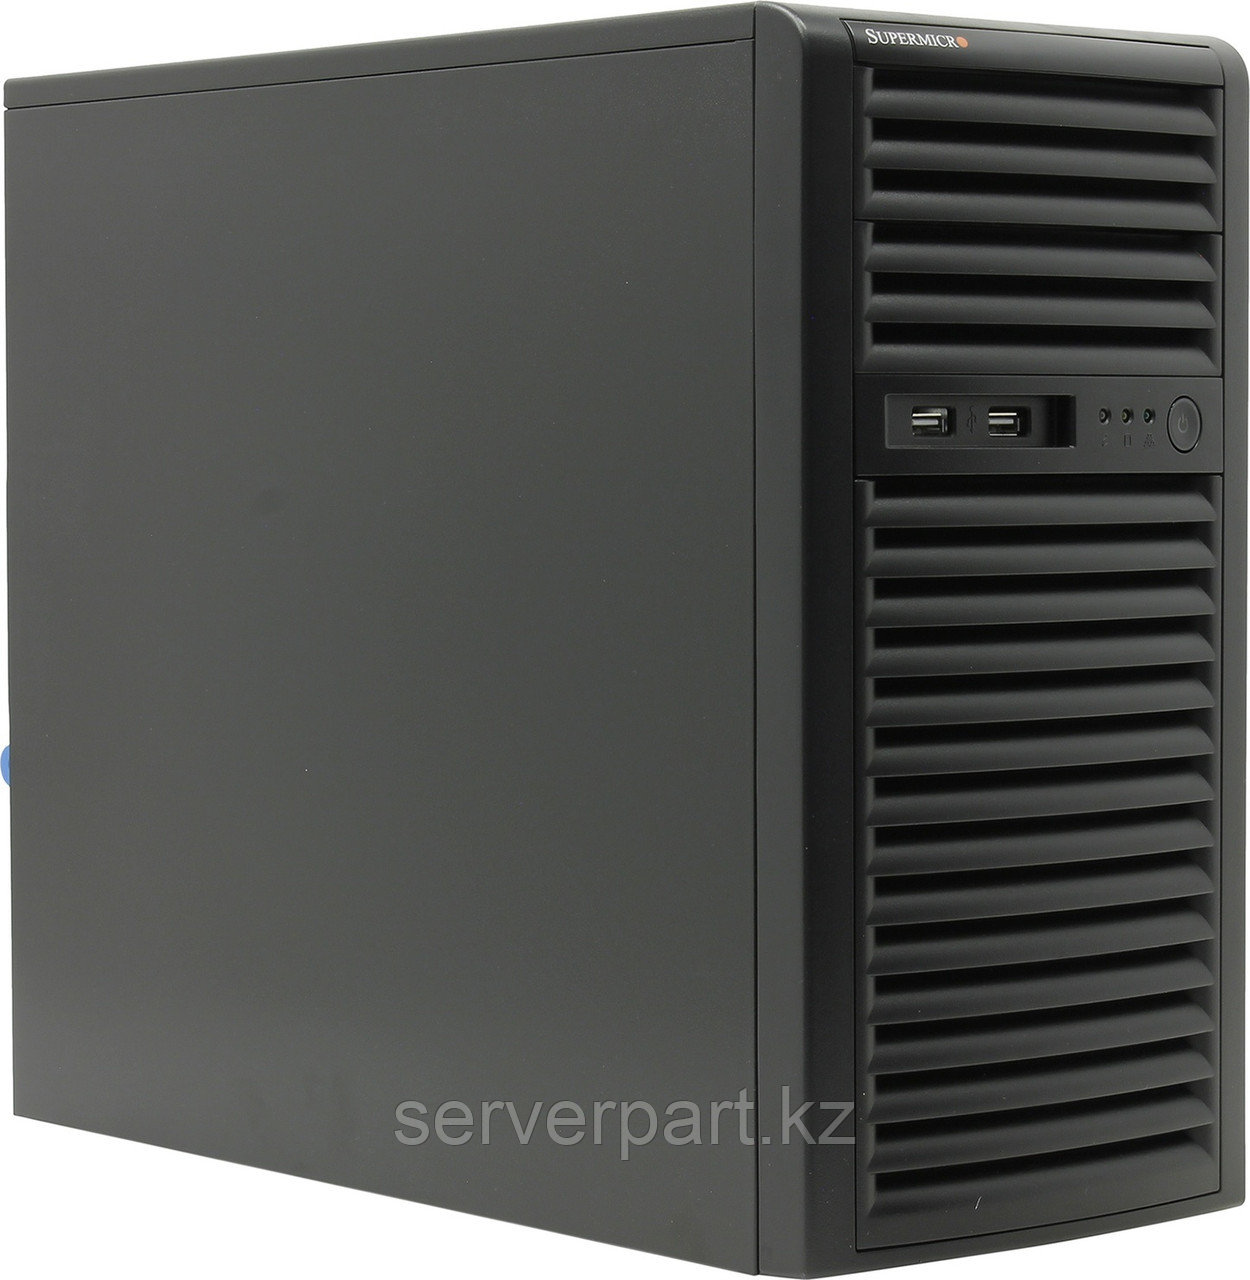 Сервер Supermicro SYS-5039D Tower/4-core intel xeon E3-1220v6 3GHz/32GB EUDIMM/1x480GB SSD DT Hyb, фото 1